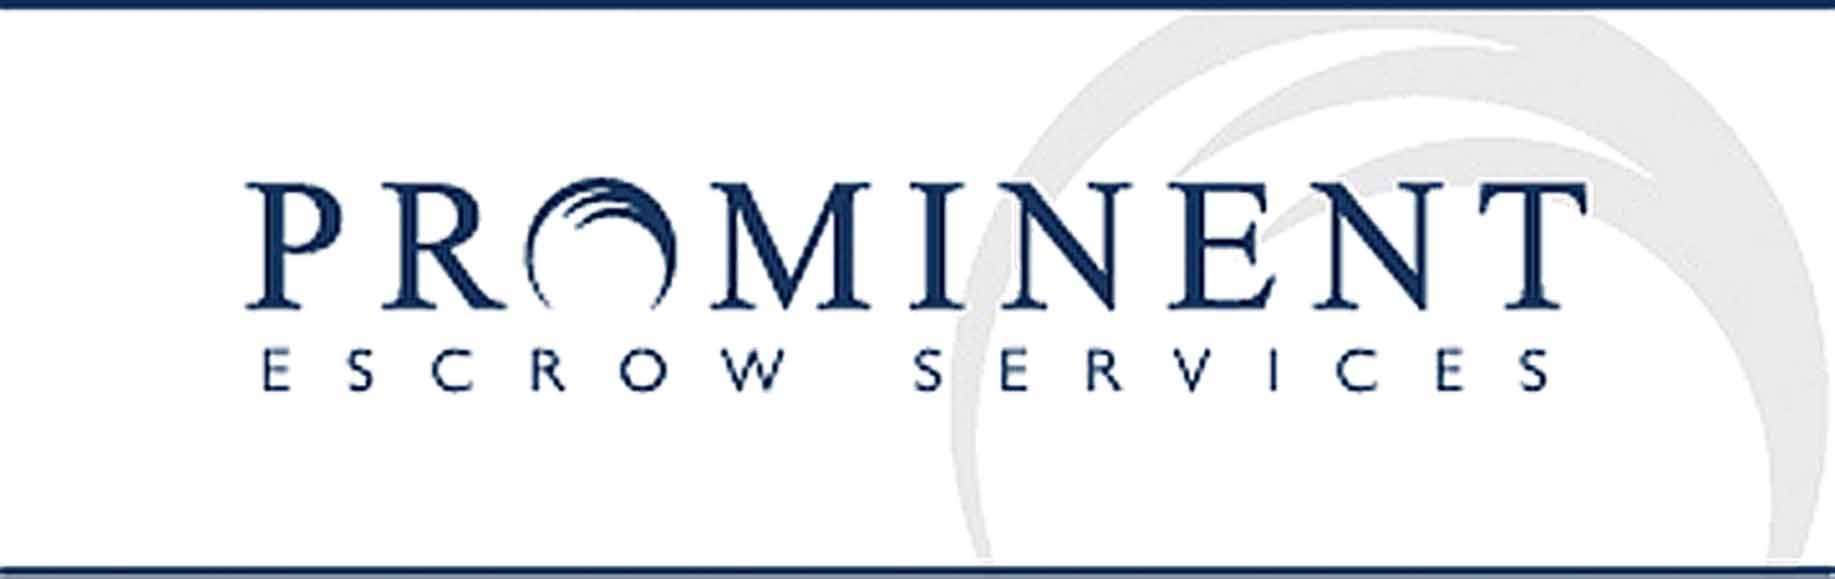 Prominent Escrow Services and Quality Escrow, Inc. logo